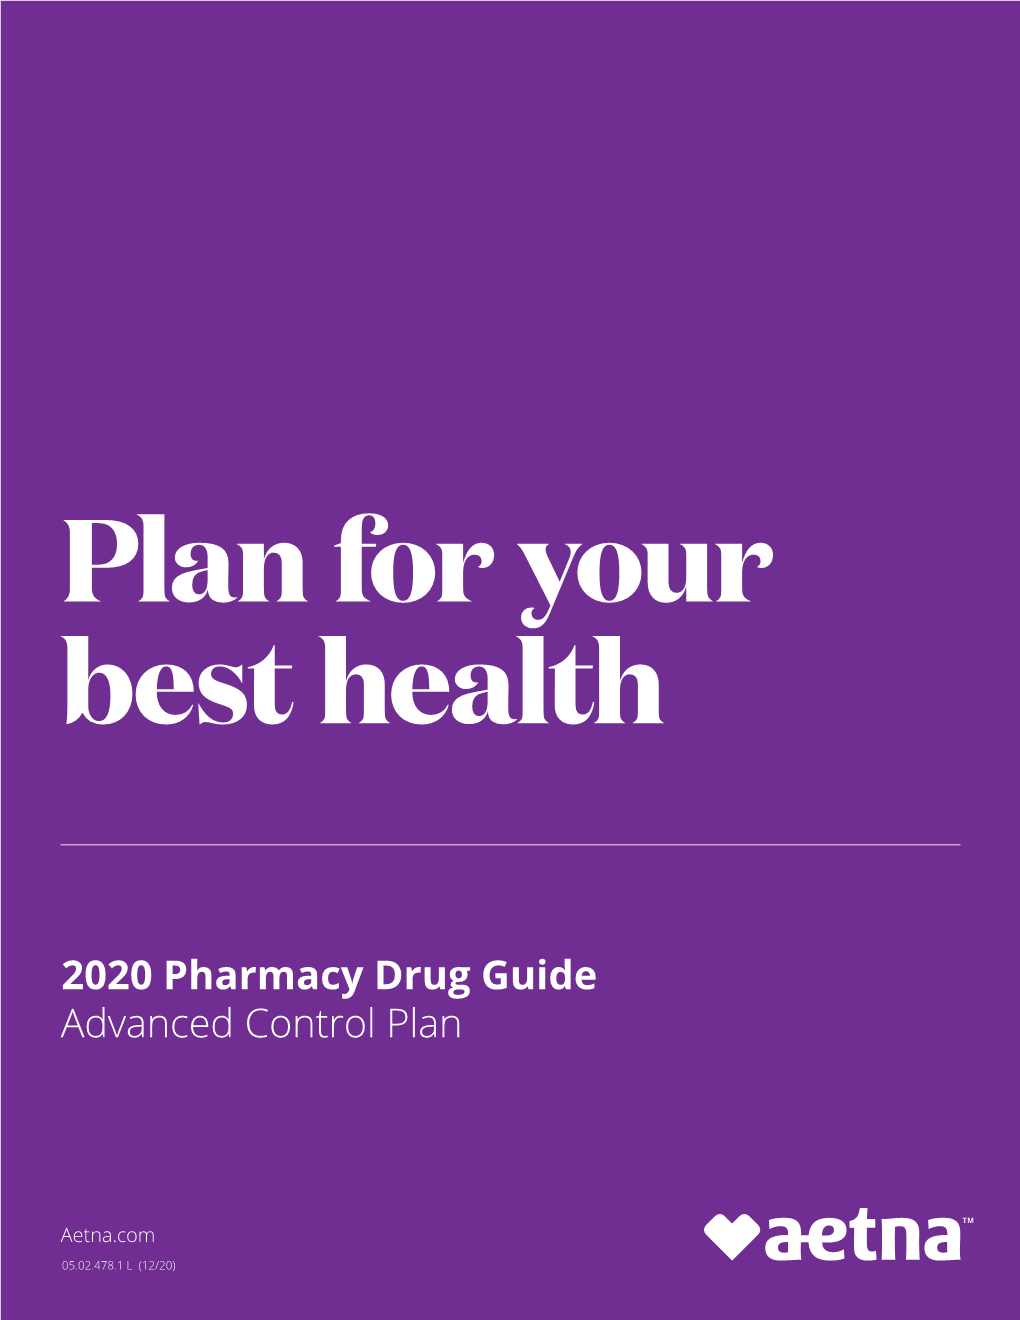 2020 Pharmacy Drug Guide - Advanced Control Plan